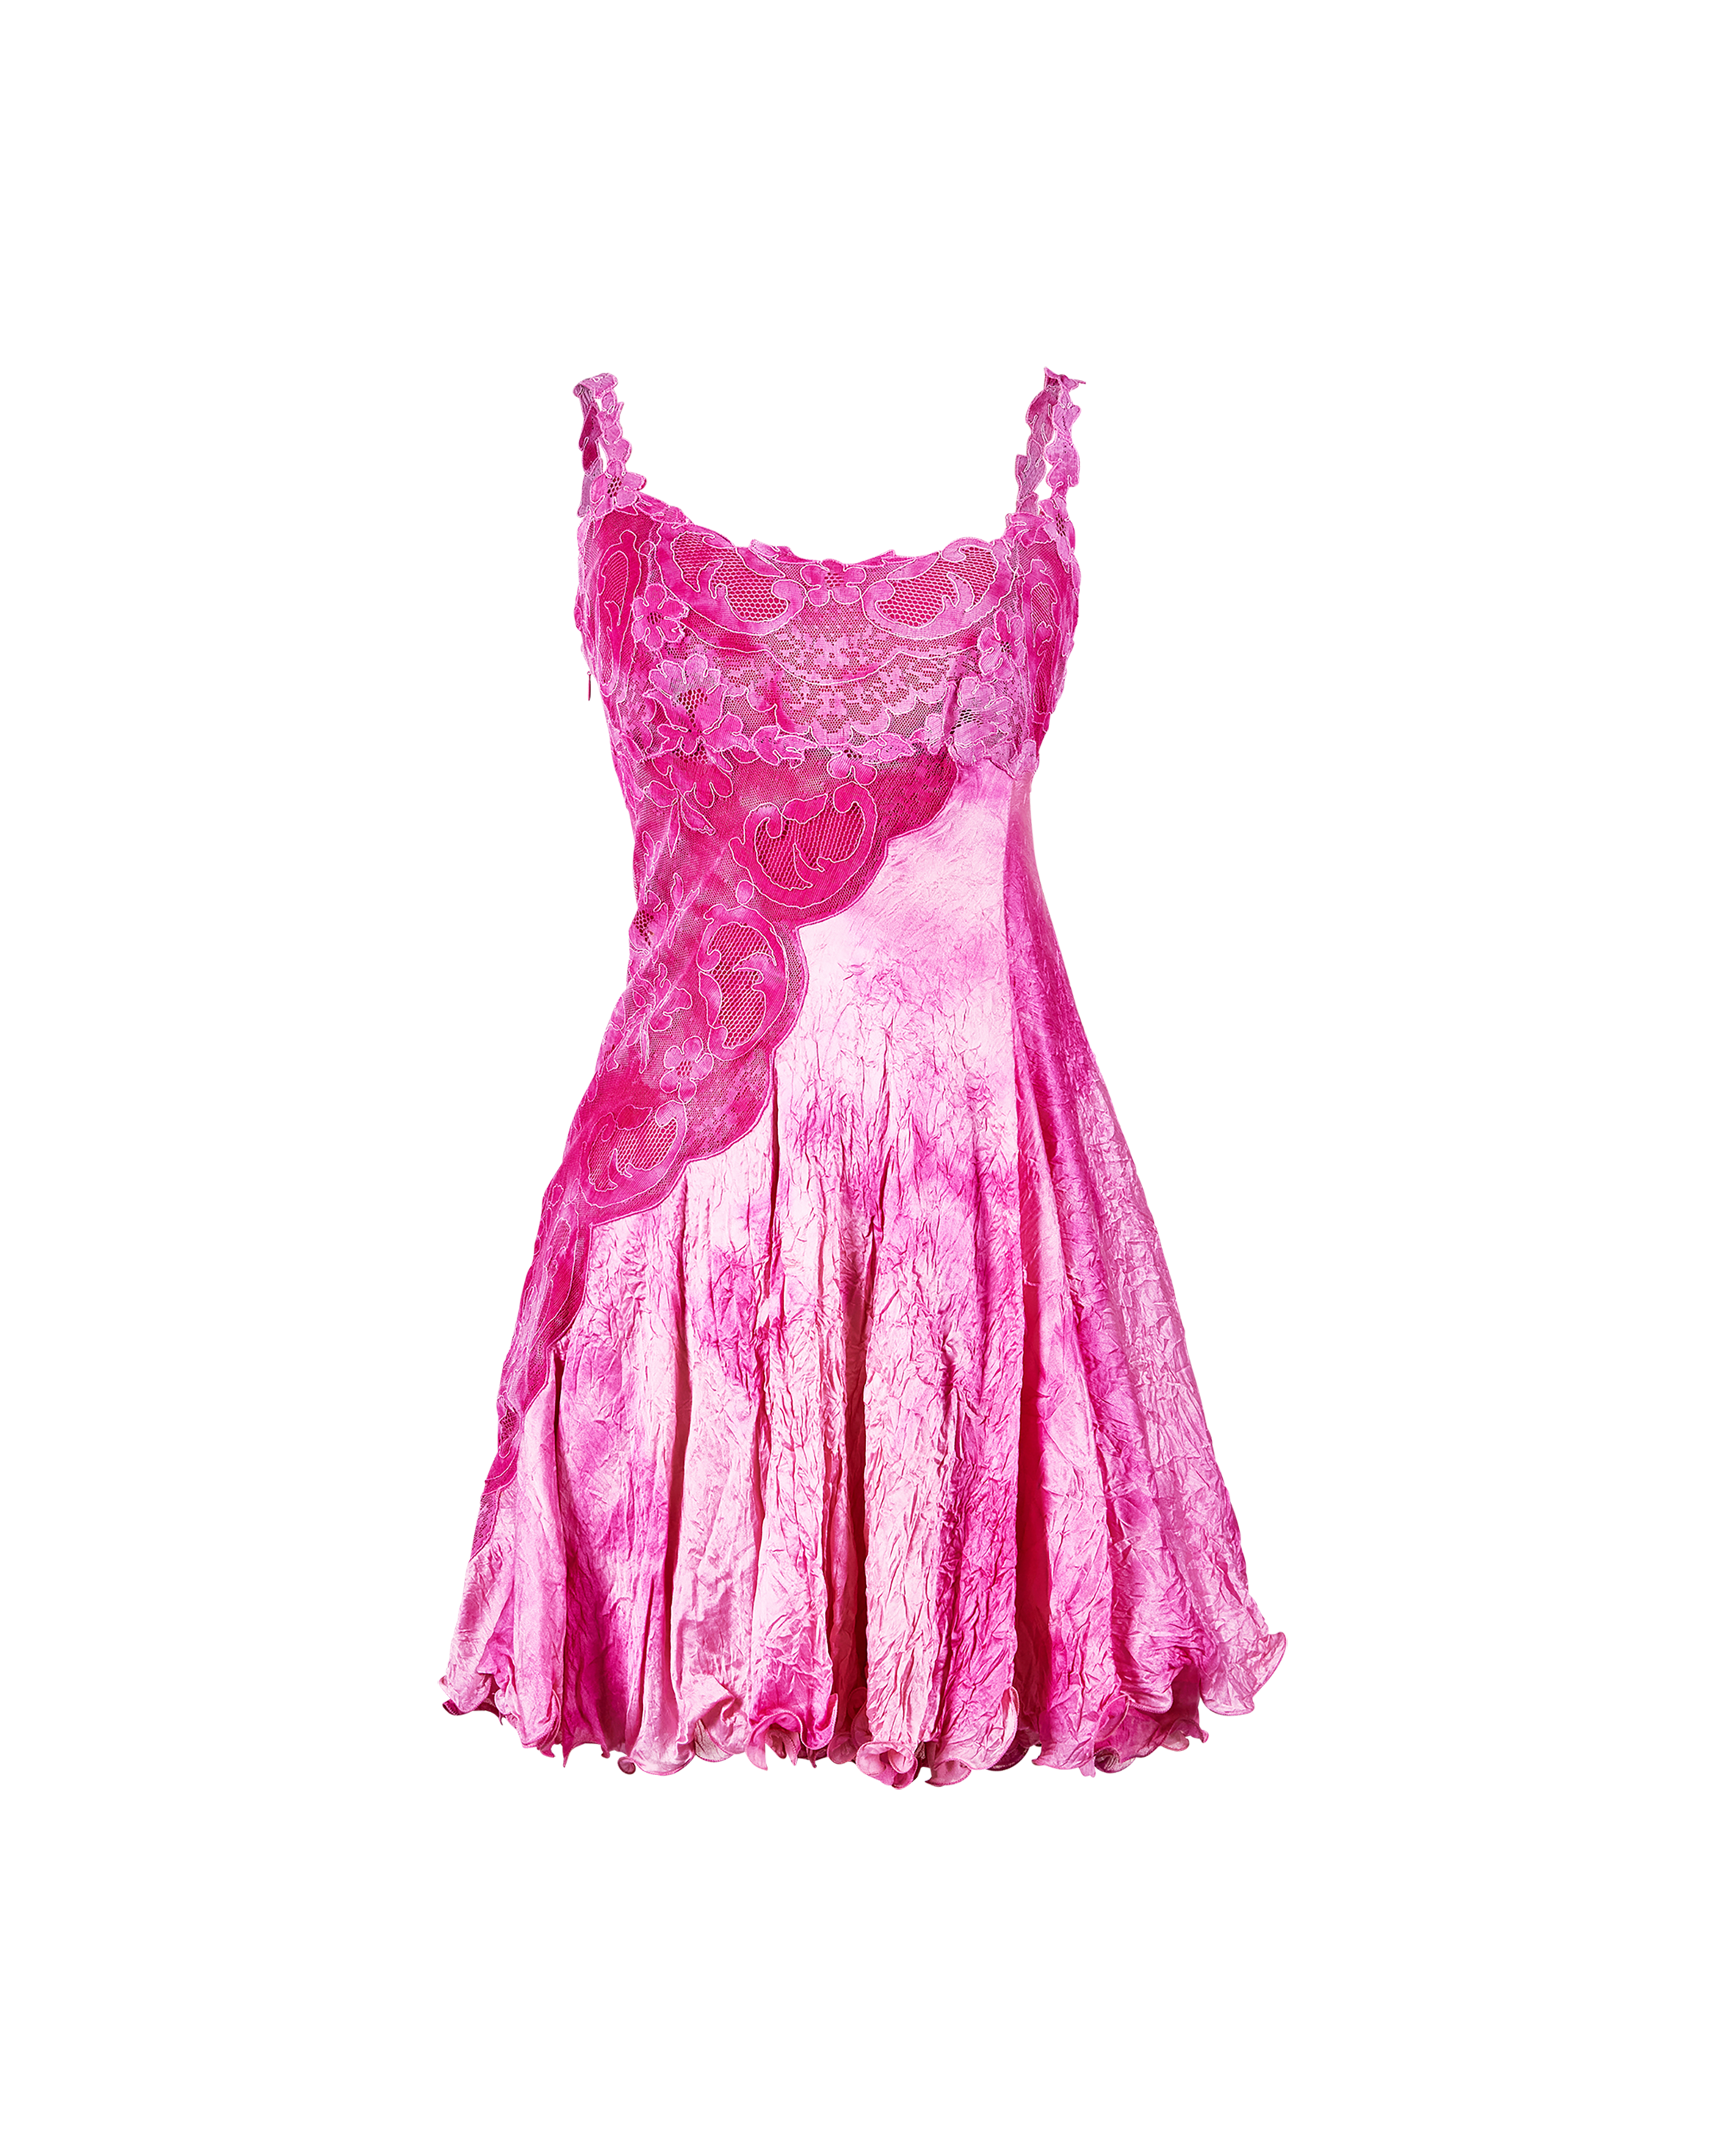 S/S 1994 Pink Crinkle Mini Dress